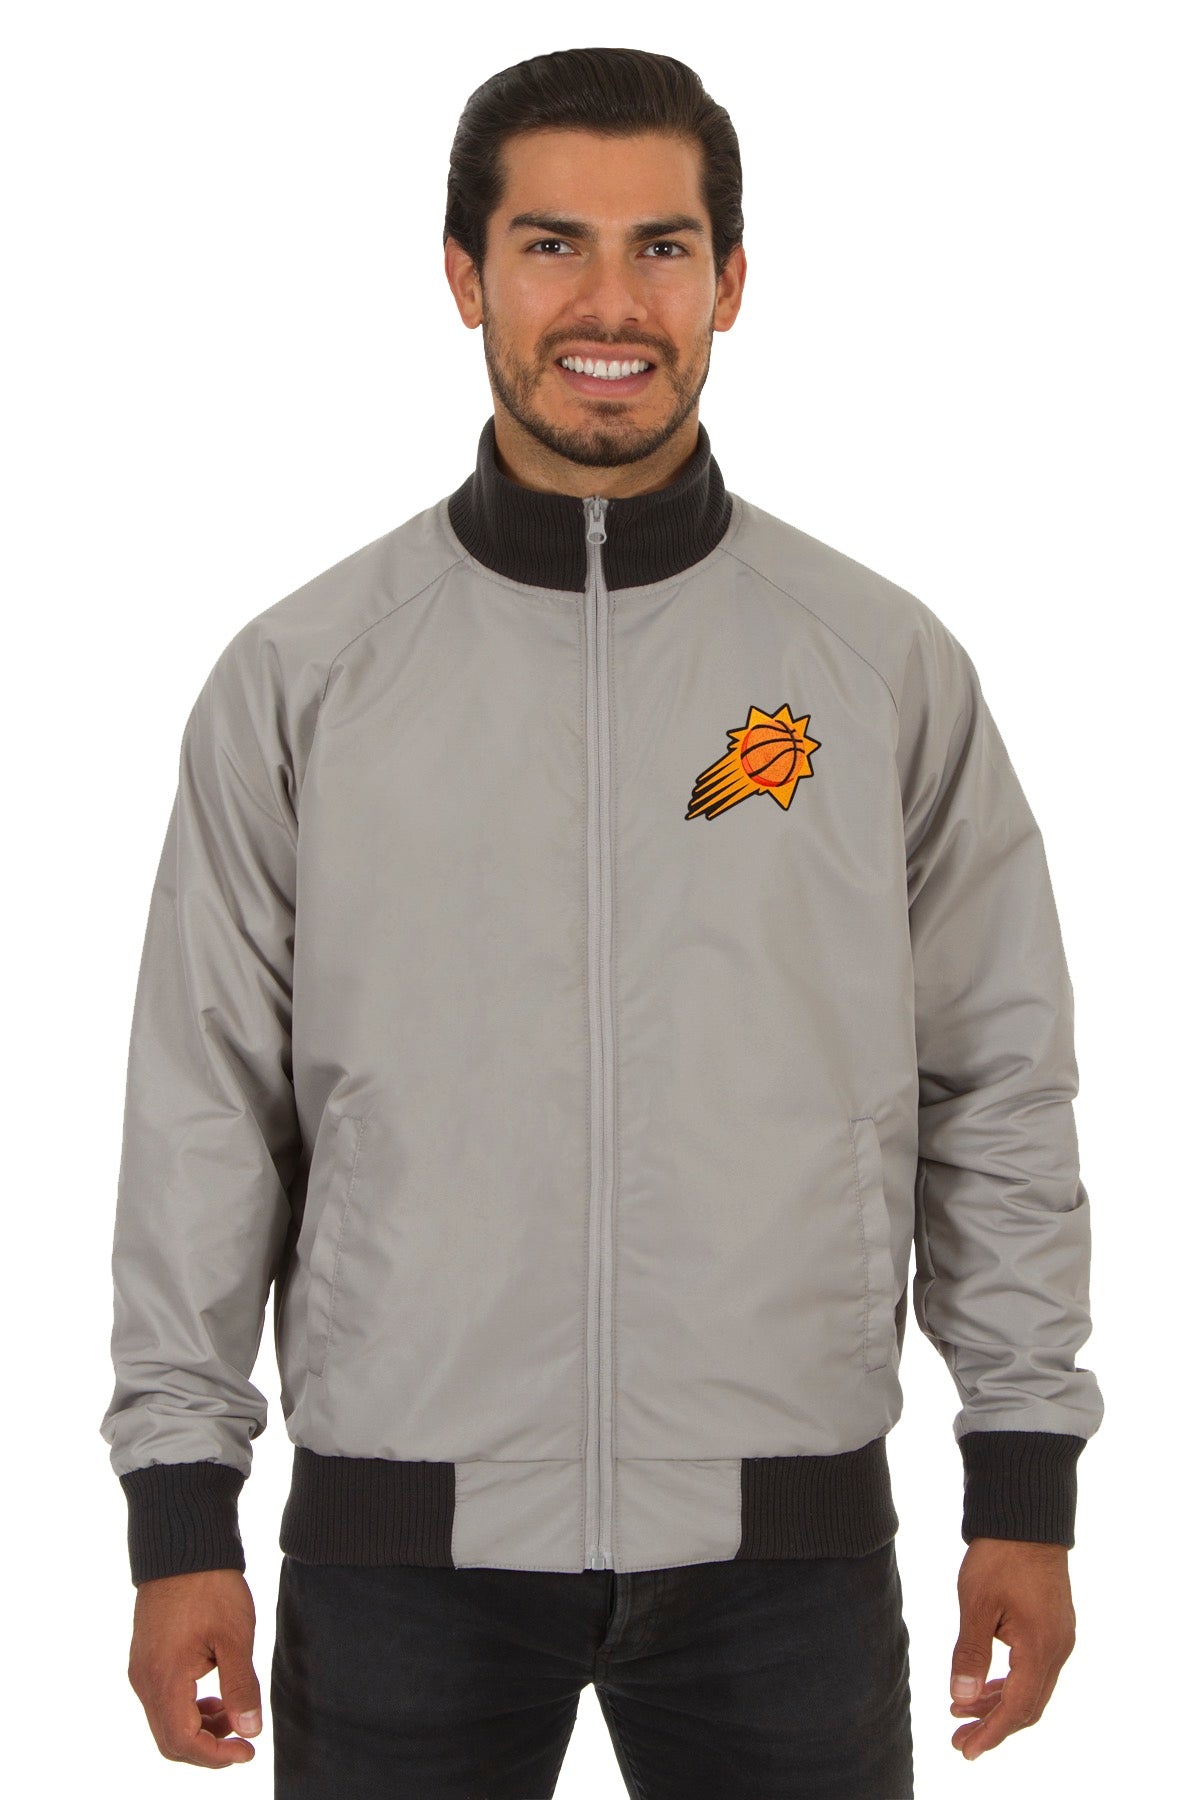 Phoenix Suns Reversible Track Jacket